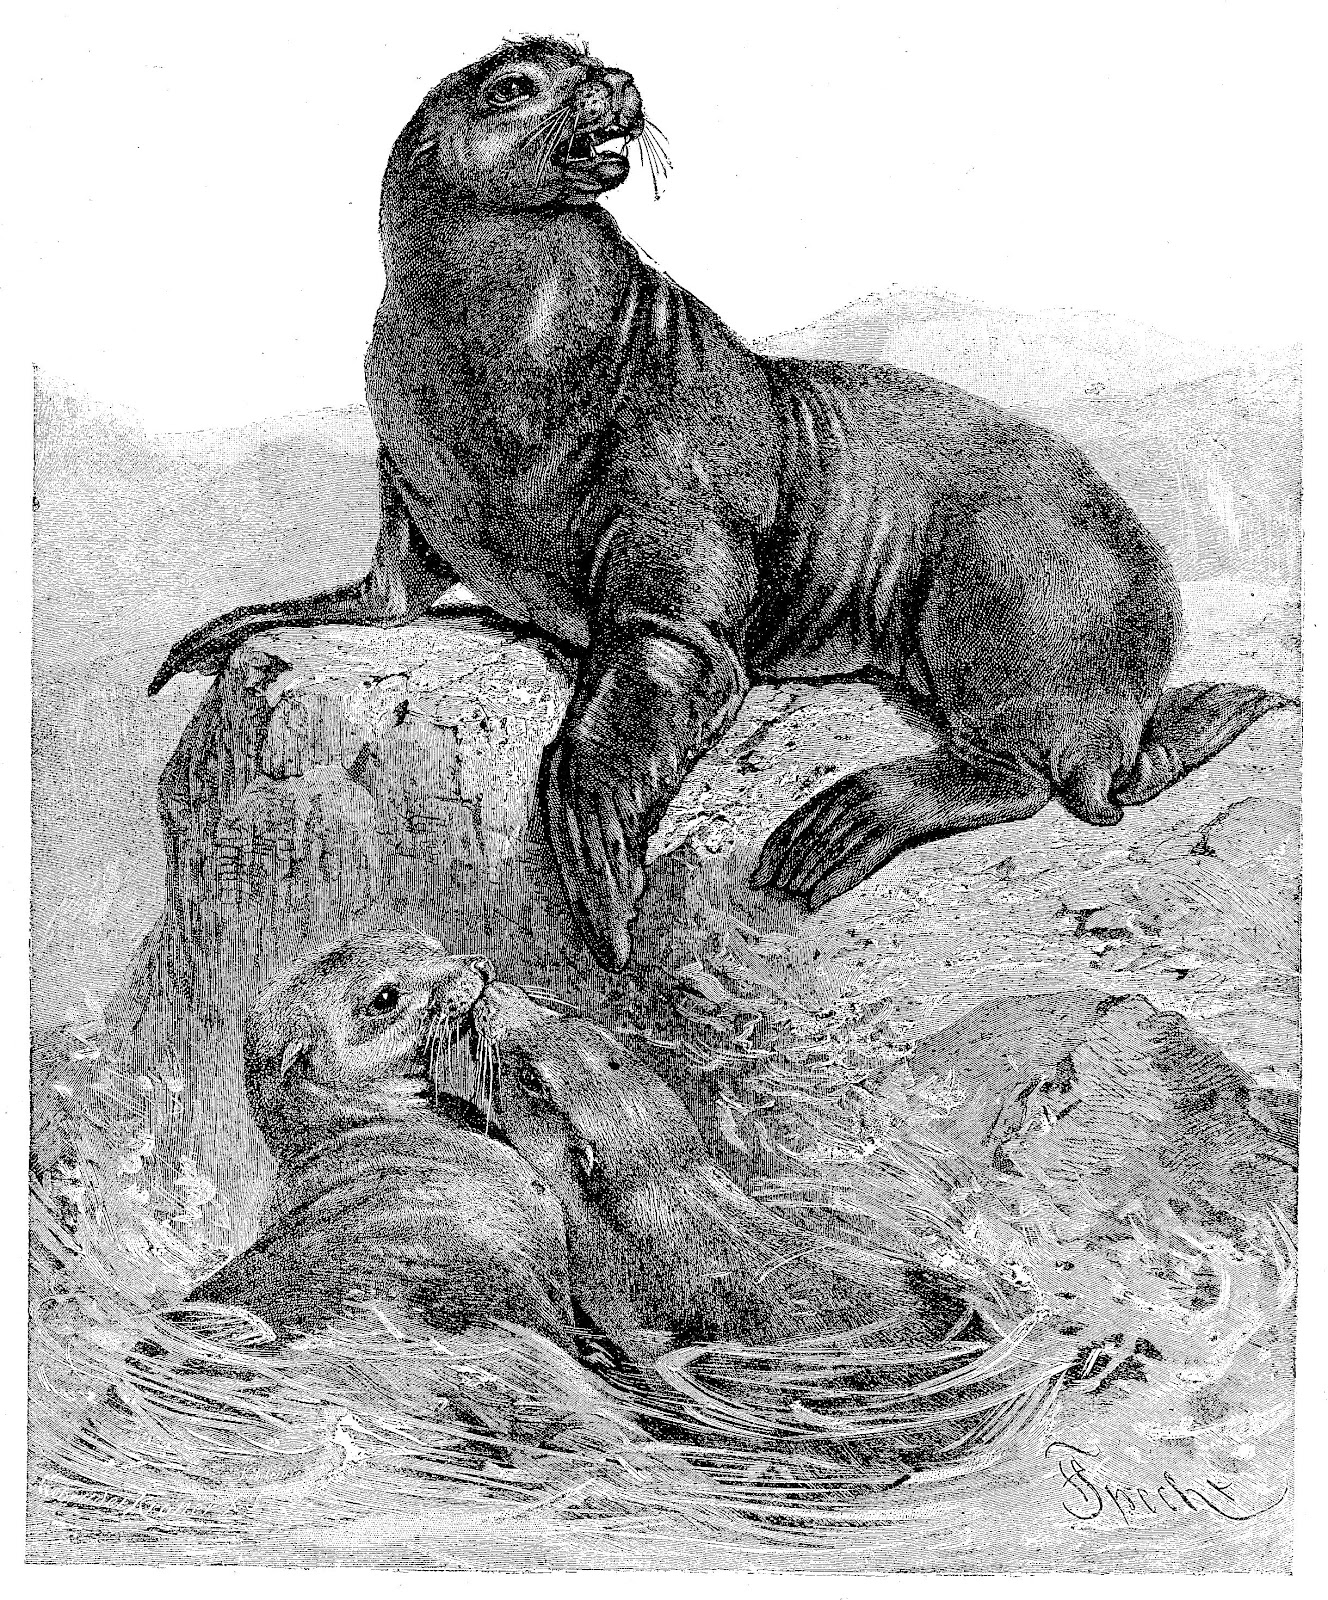 Clip Art Designs, Vector Clip Art Graghic: Free Vintage Animal Graphic:  Black and White Illustration of 3 Sea Lions